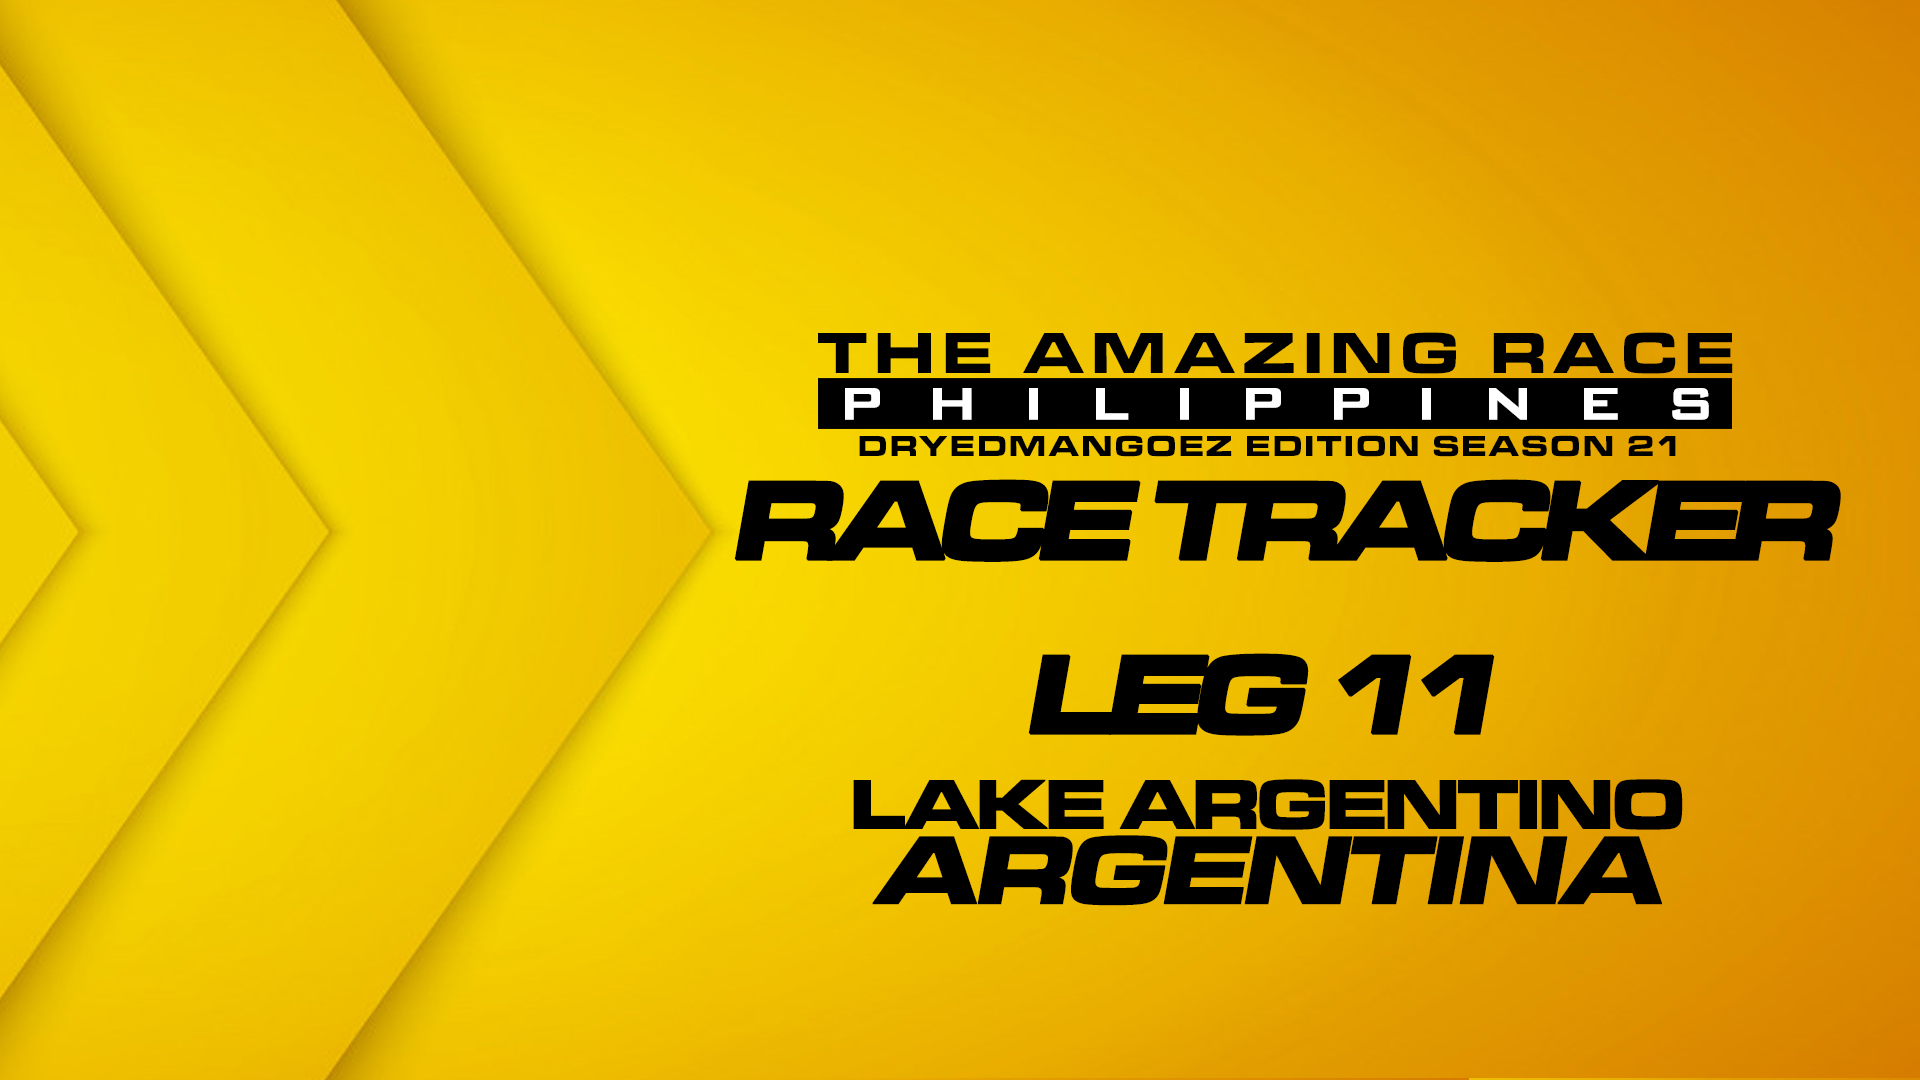 The Amazing Race Philippines: DryedMangoez Edition Season 21 Race Tracker – Leg 11